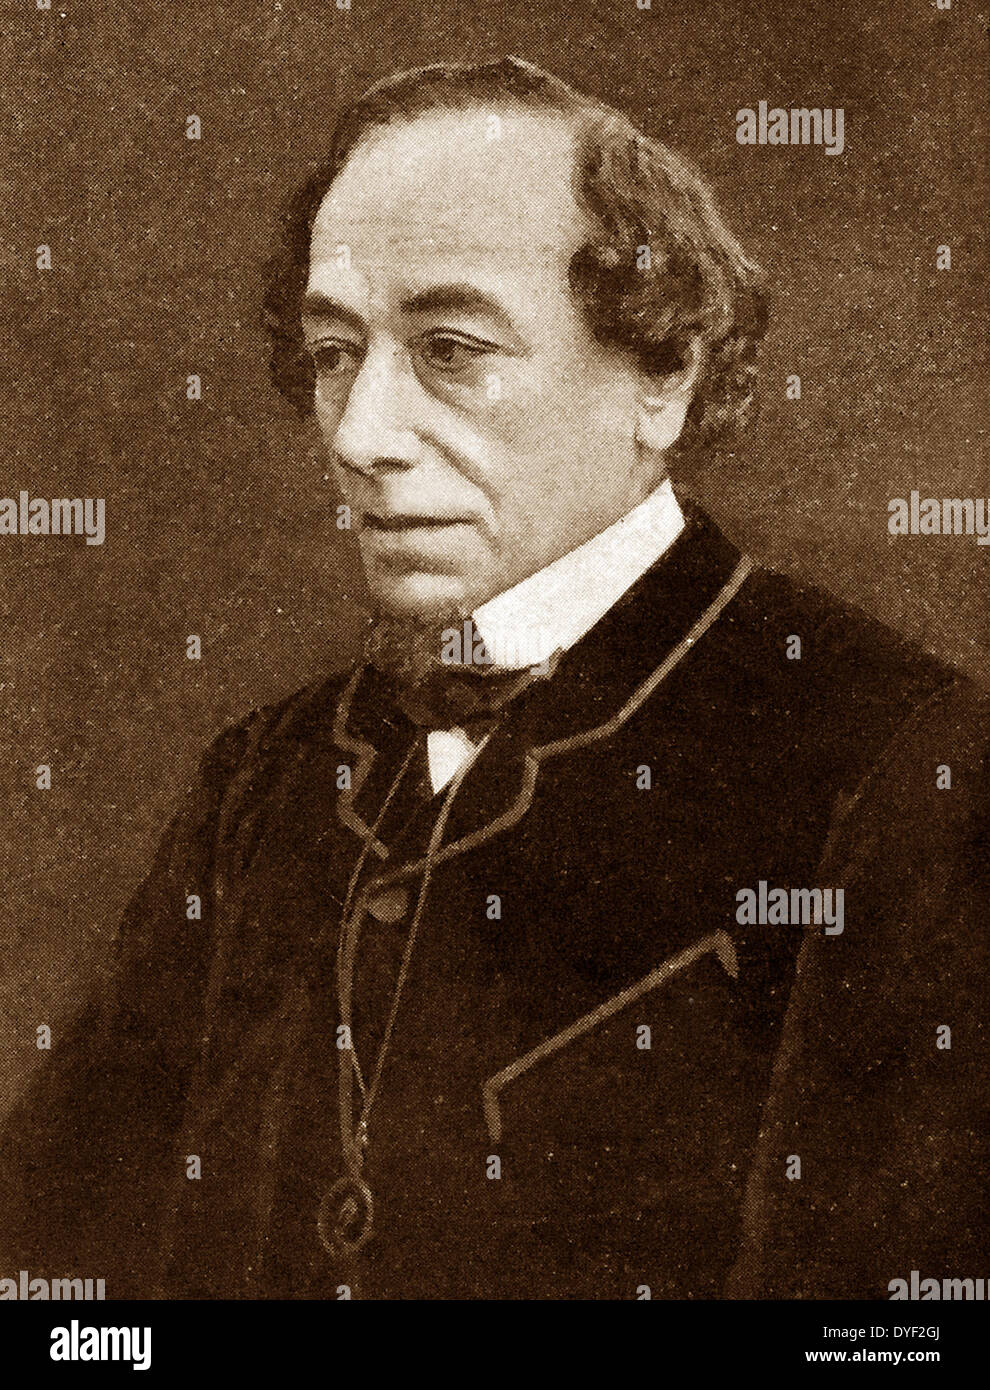 Benjamin Disraeli, 1st Earl of Beaconsfield. Stock Photo